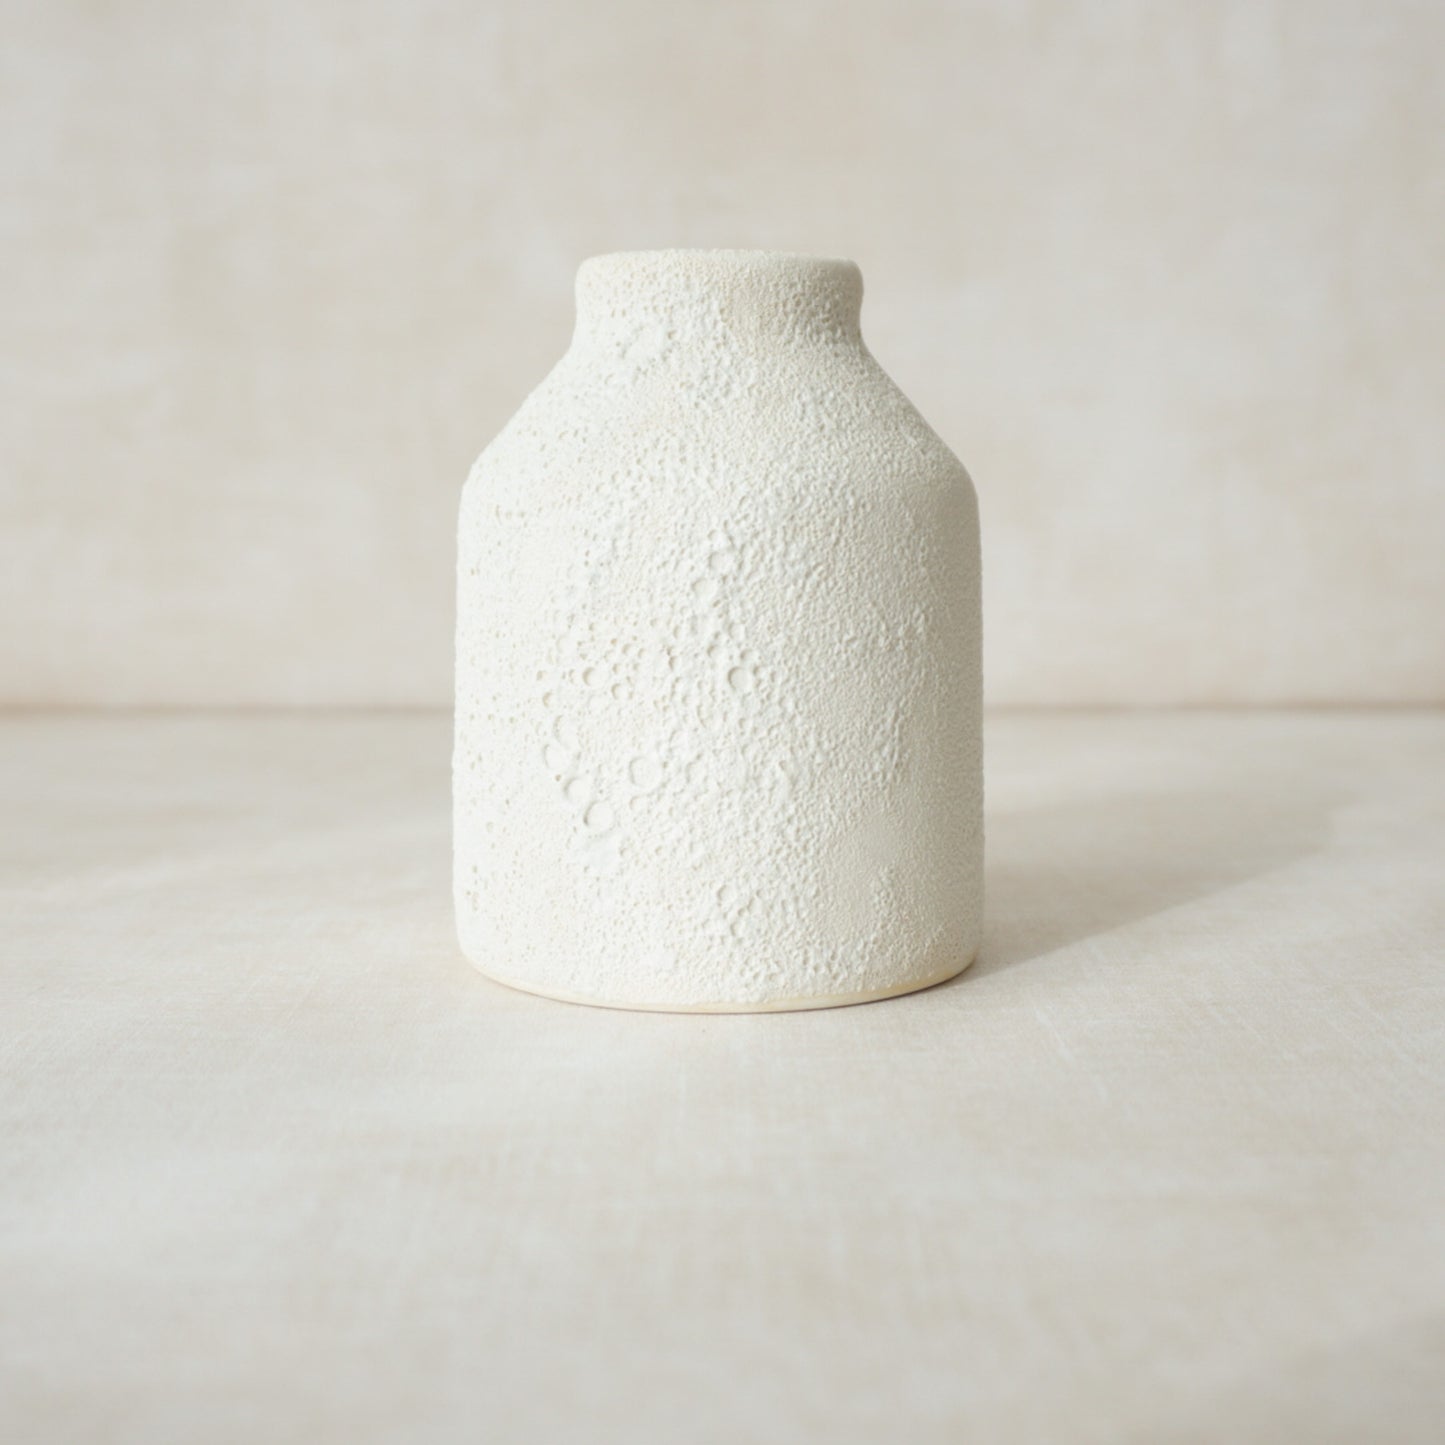 White Crater Vase - 2 sizes